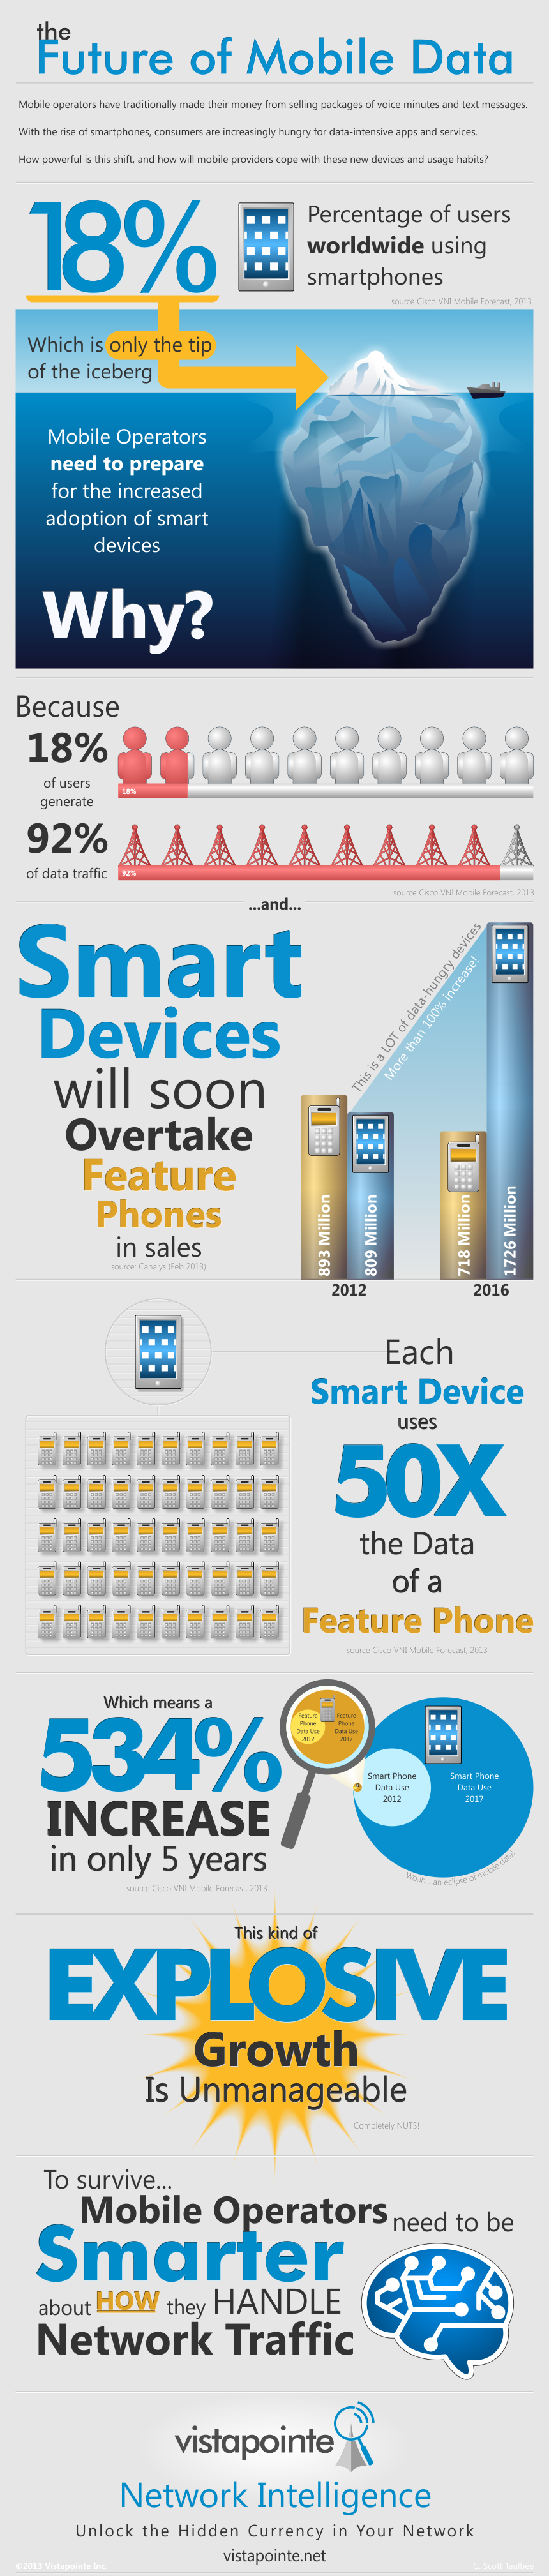 The Future of Mobile Data